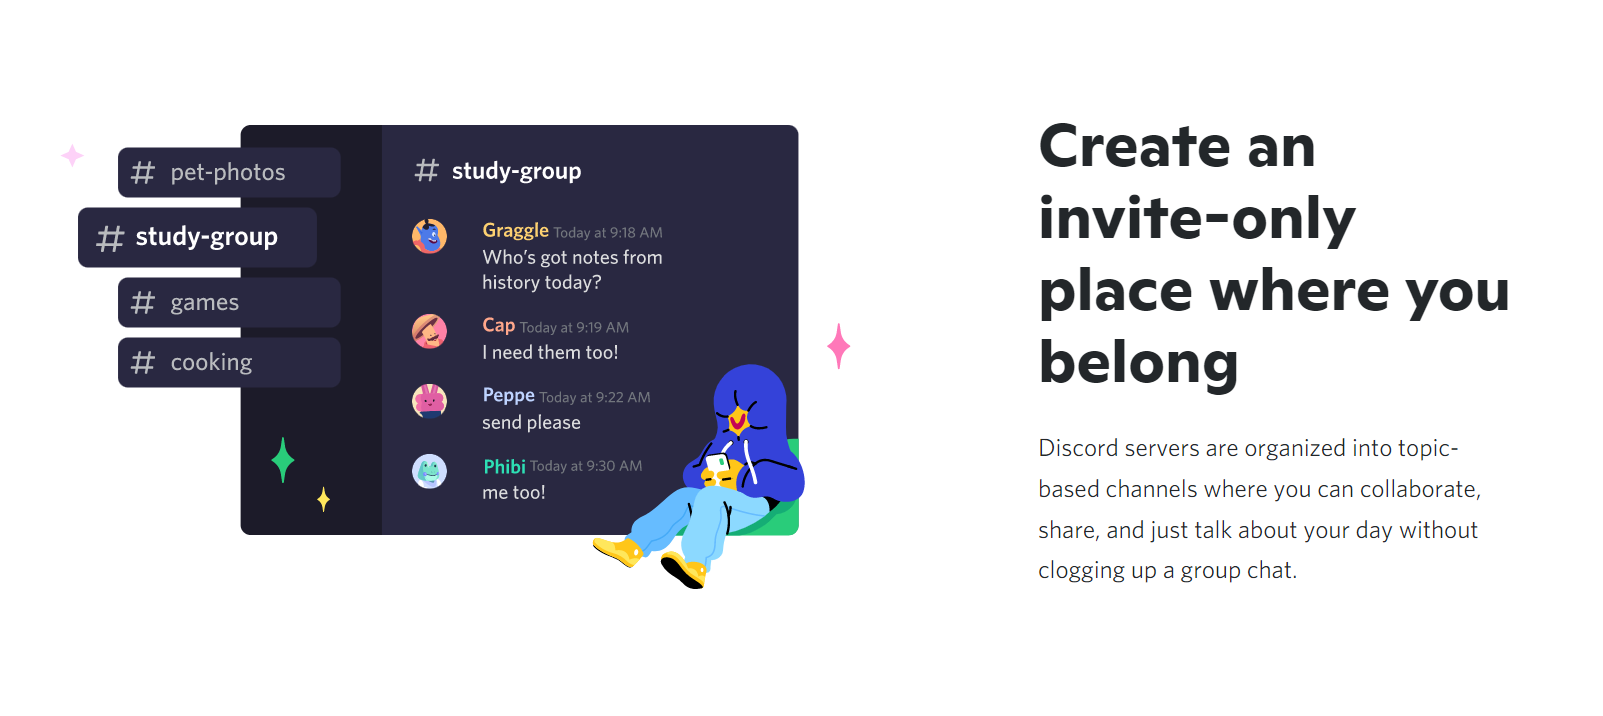 Discord Screen Share Audio : Create an invite